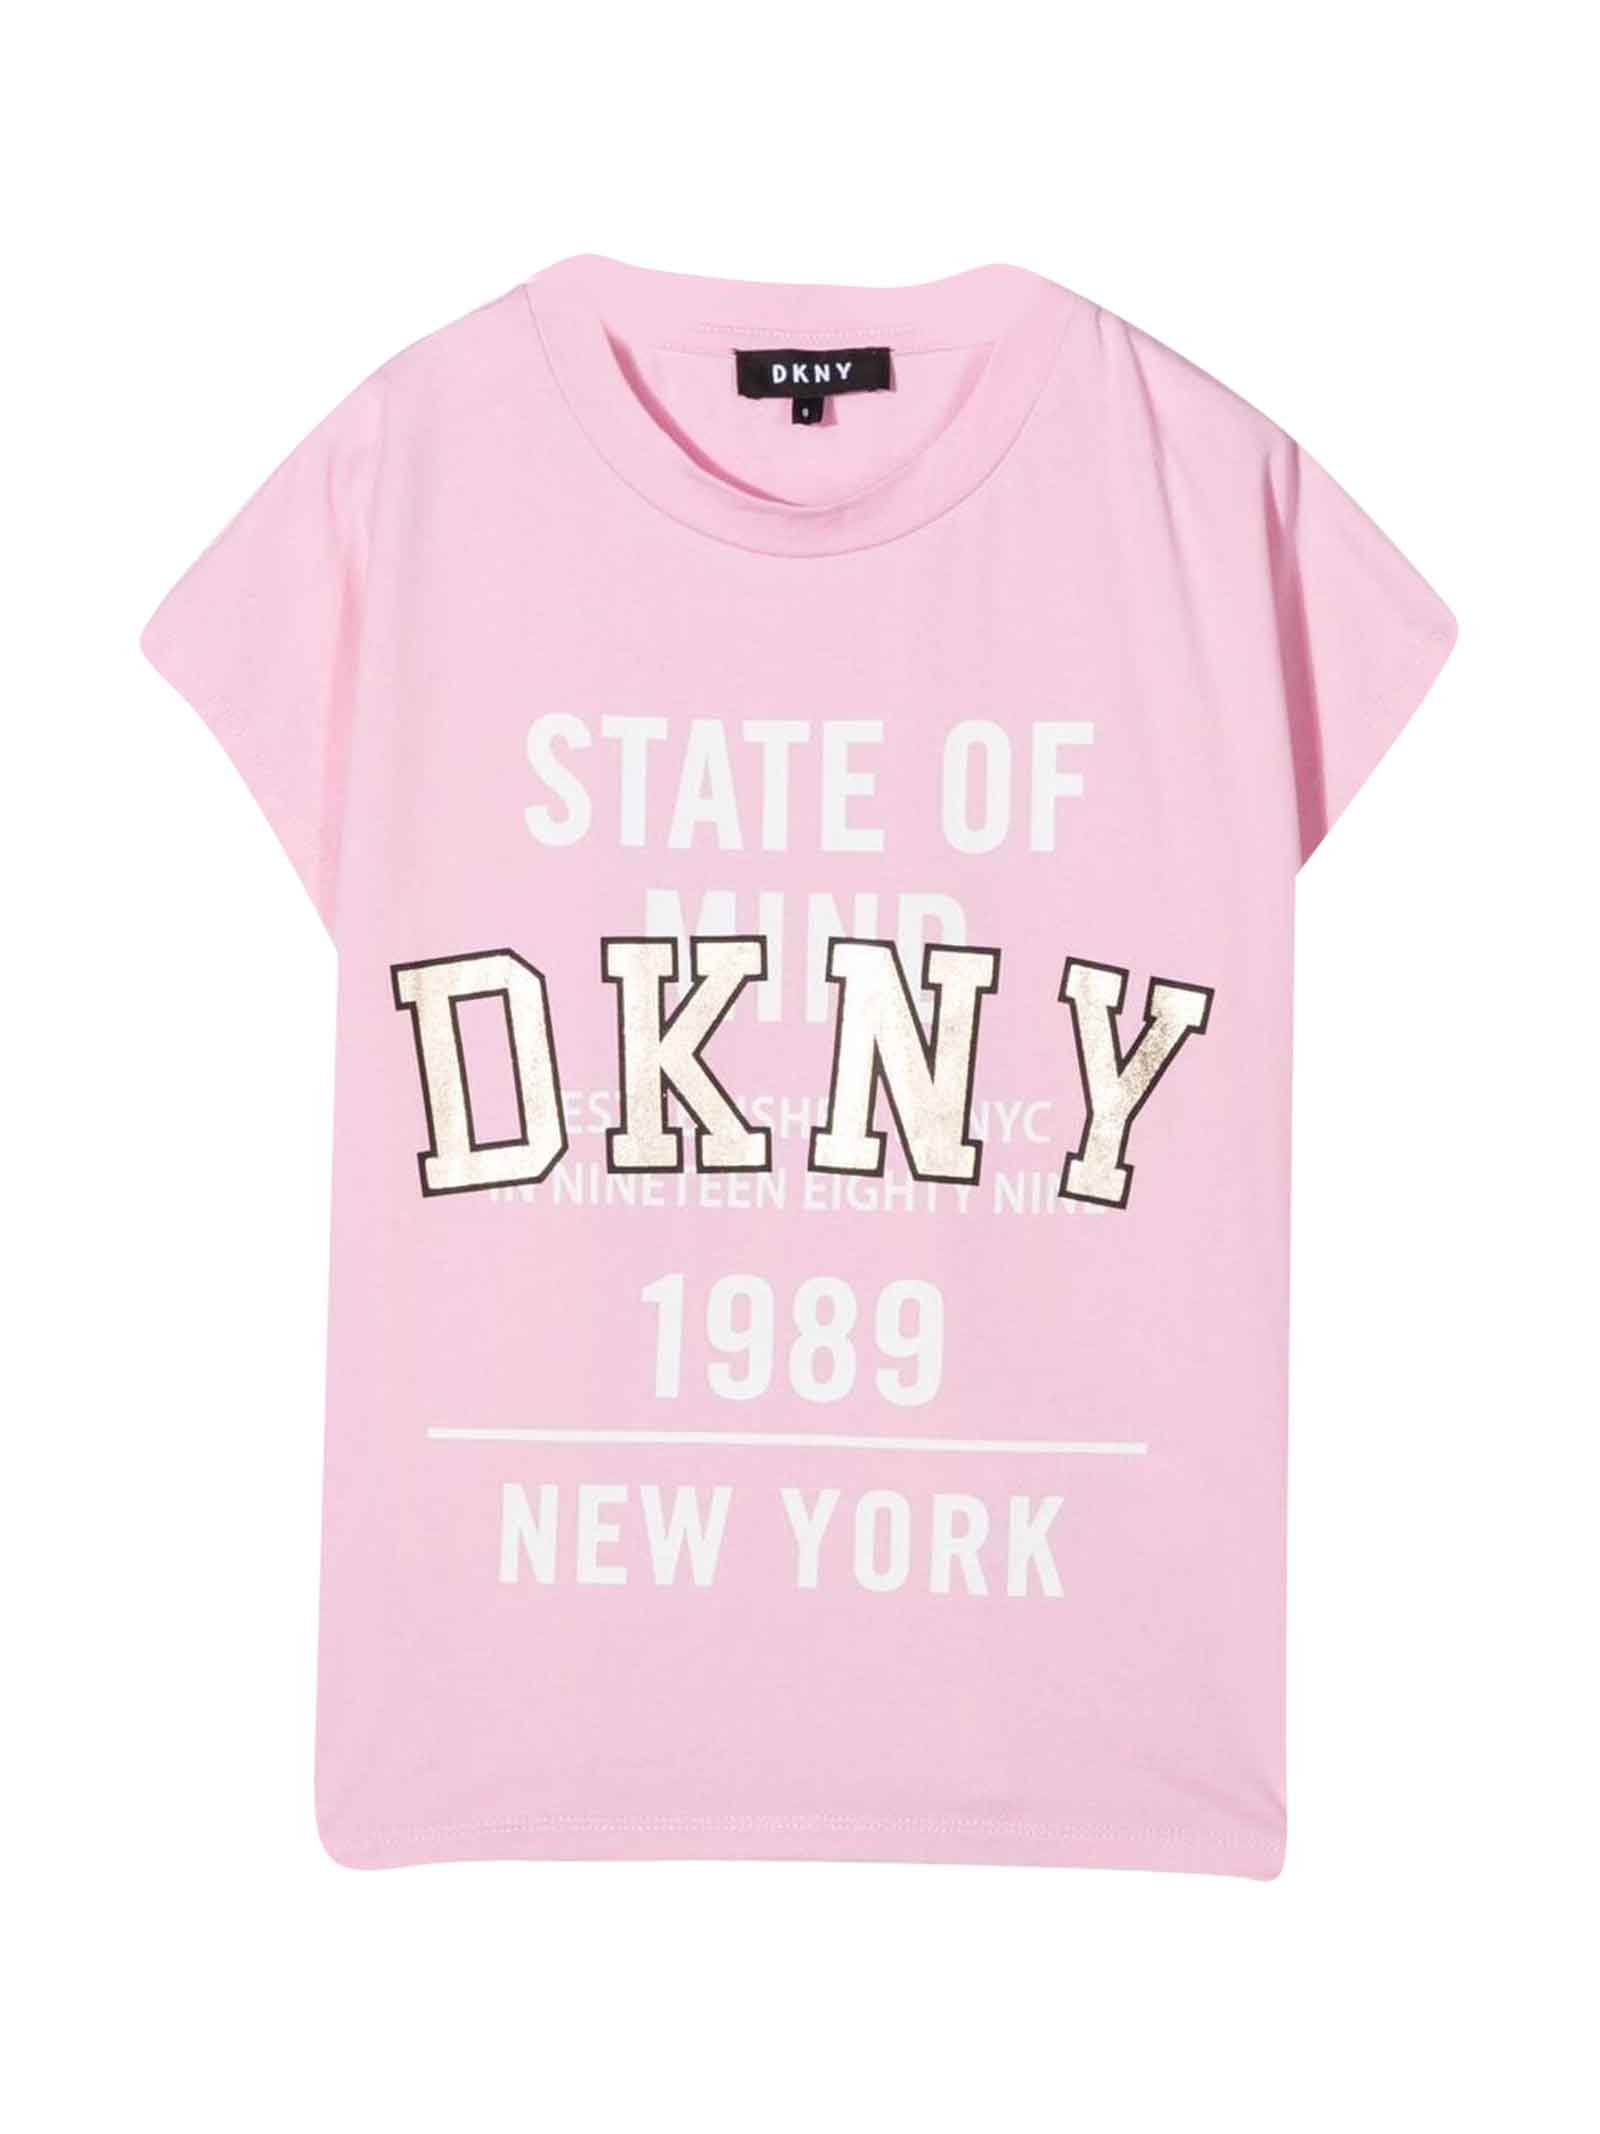 DKNY Pink T-shirt Teen Unisex